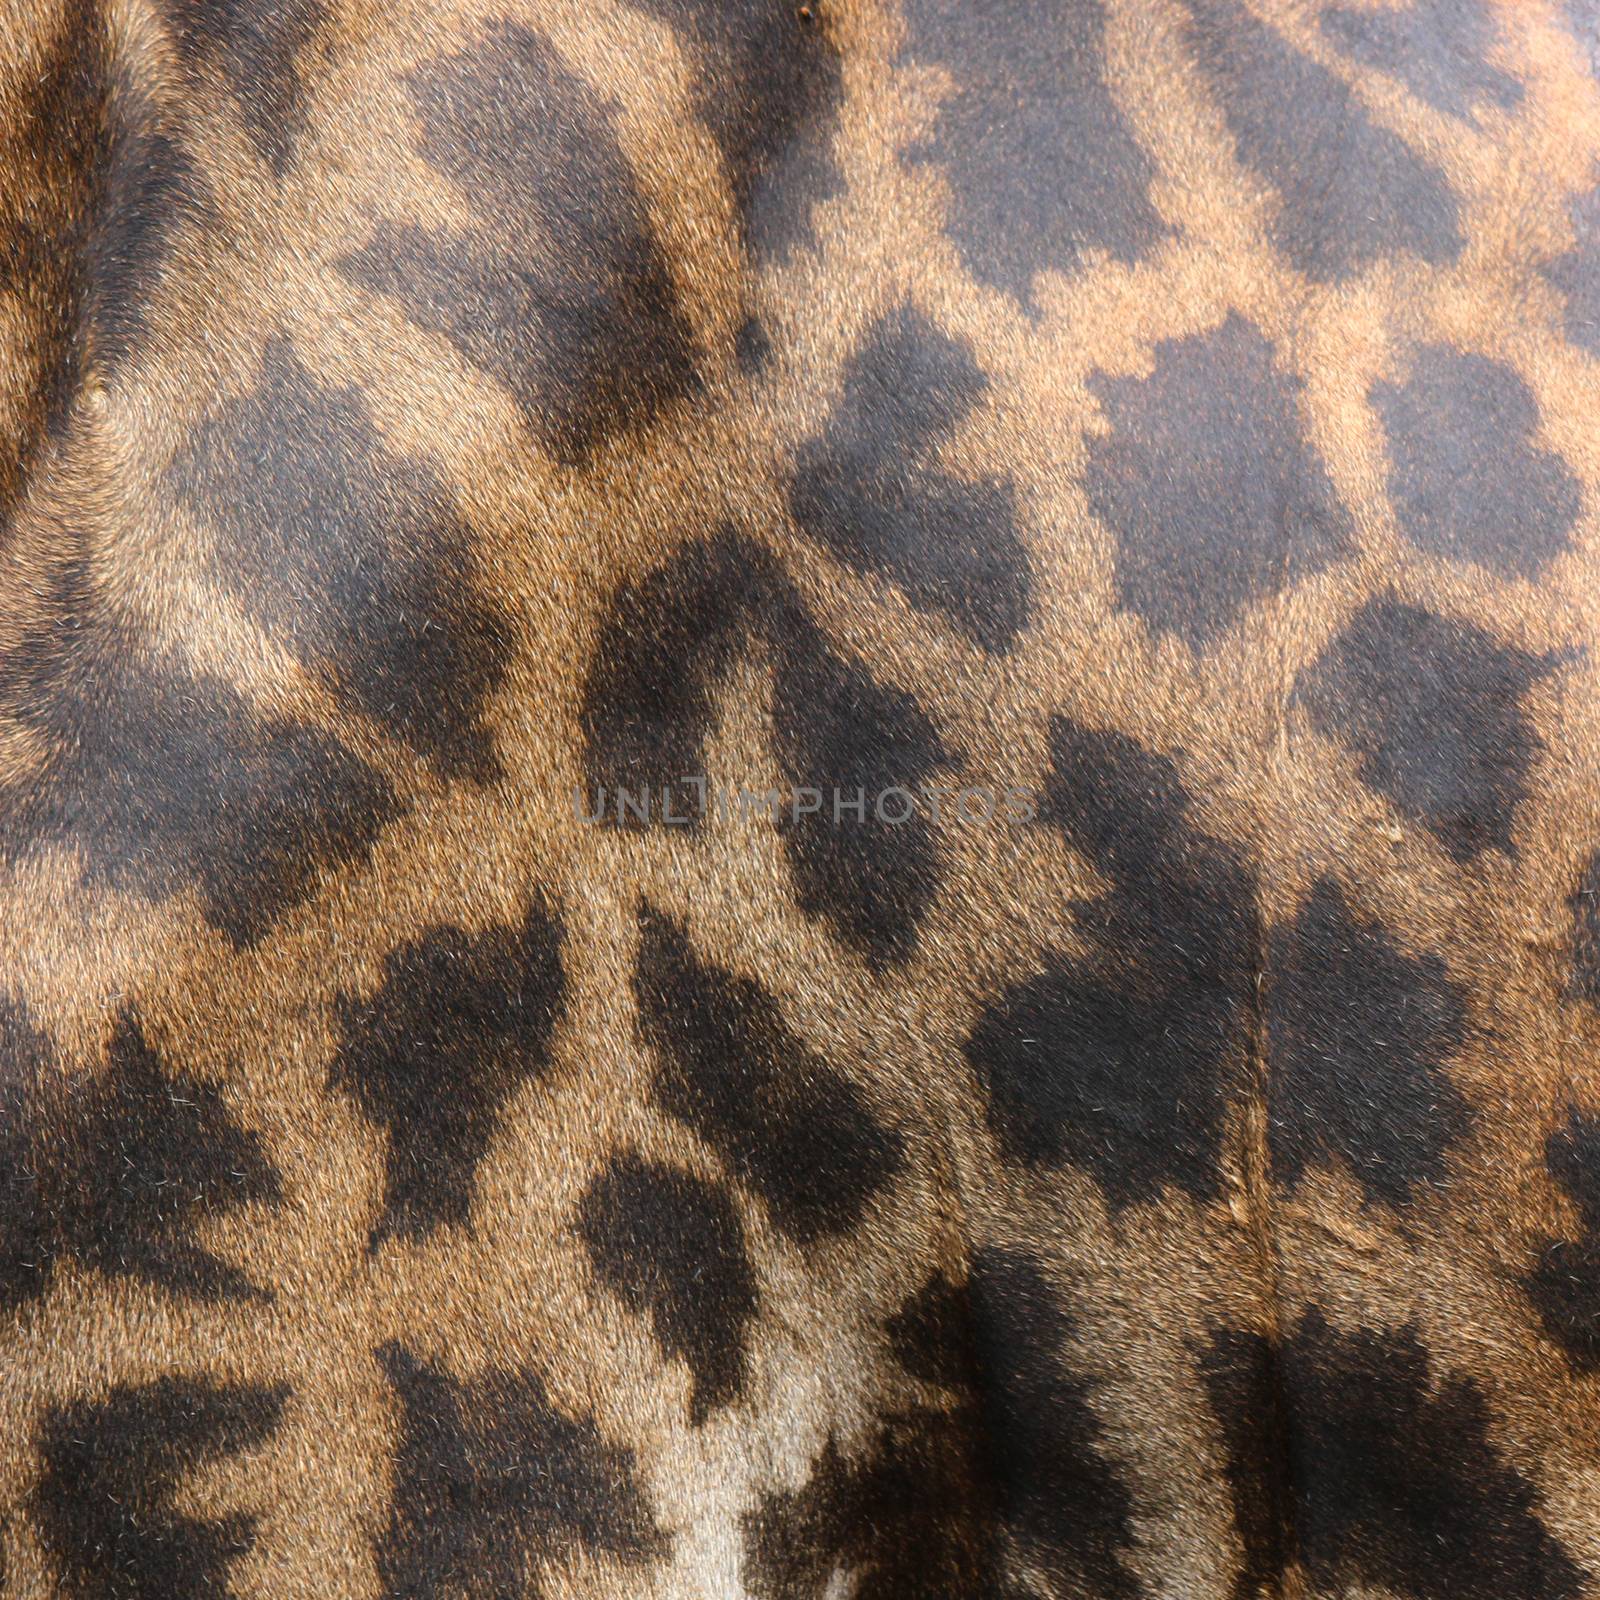 skin of giraffe by leisuretime70